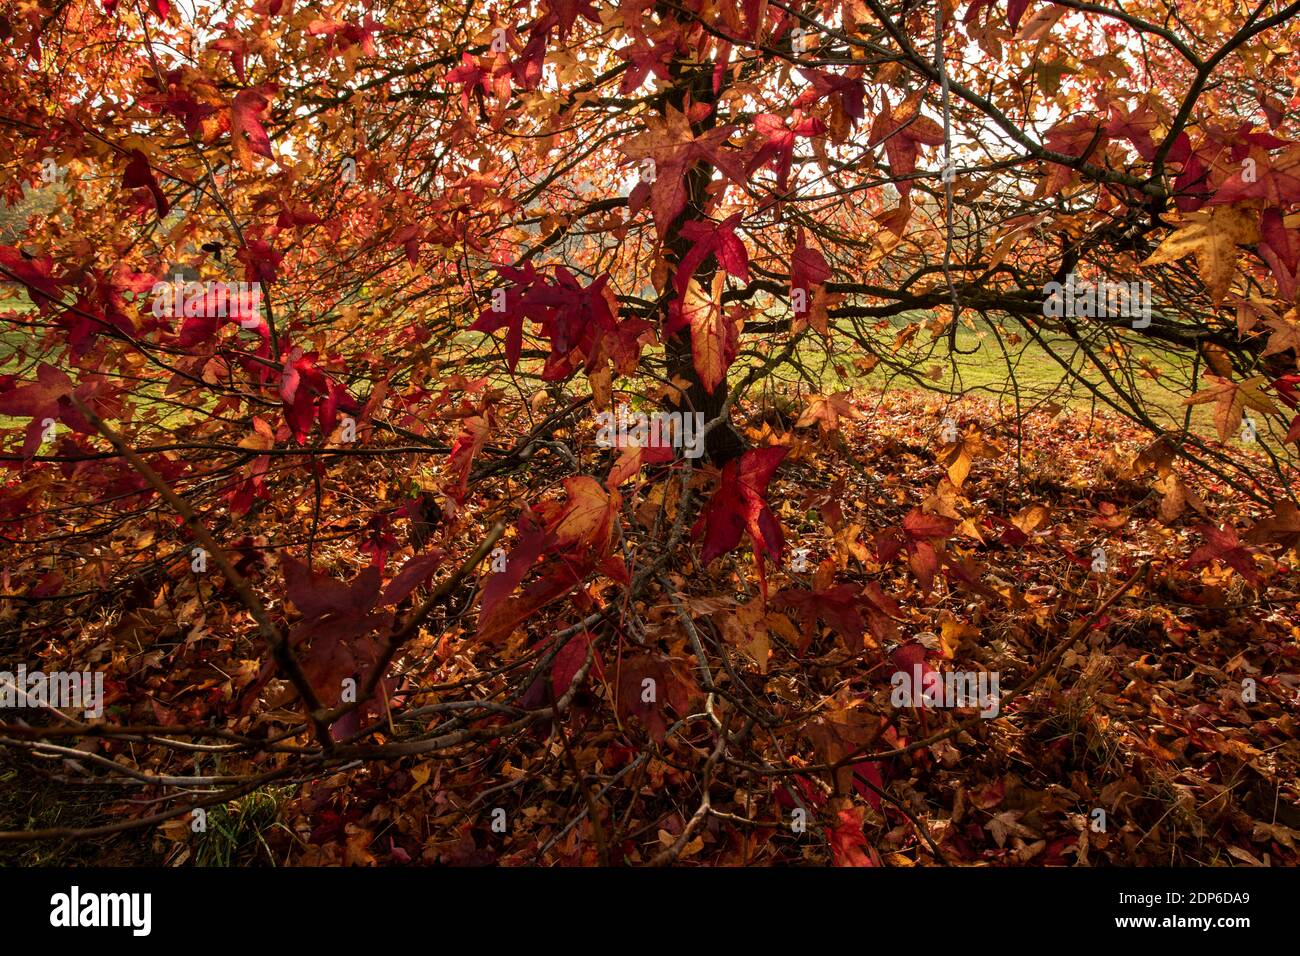 Liquidambar Styraciflua Corky in full autumn livery of bright red leaves Stock Photo